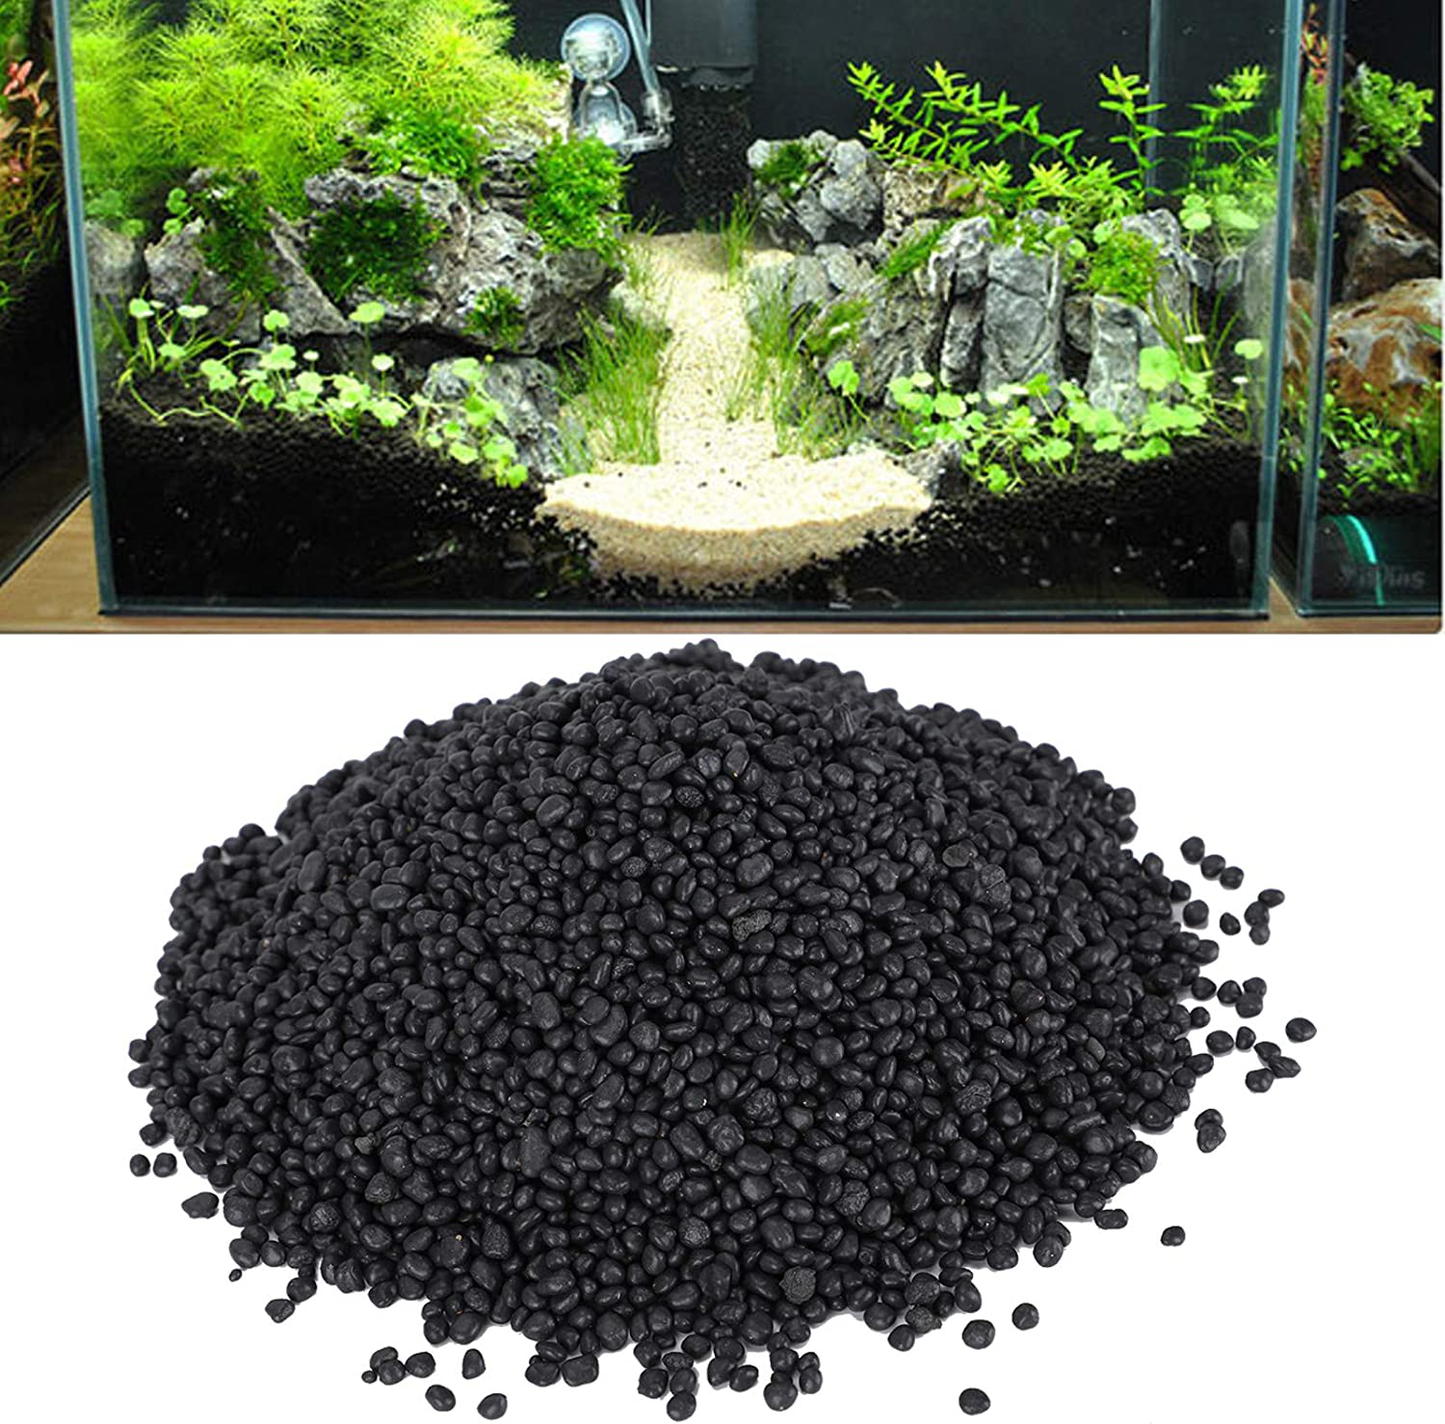 Aquarium Black Gravel Fish Tank Water Plants Mud Aquarium Substrate Soil for Aquariums Landscaping Vases Plants 1Kg Animals & Pet Supplies > Pet Supplies > Fish Supplies > Aquarium Gravel & Substrates Pssopp   